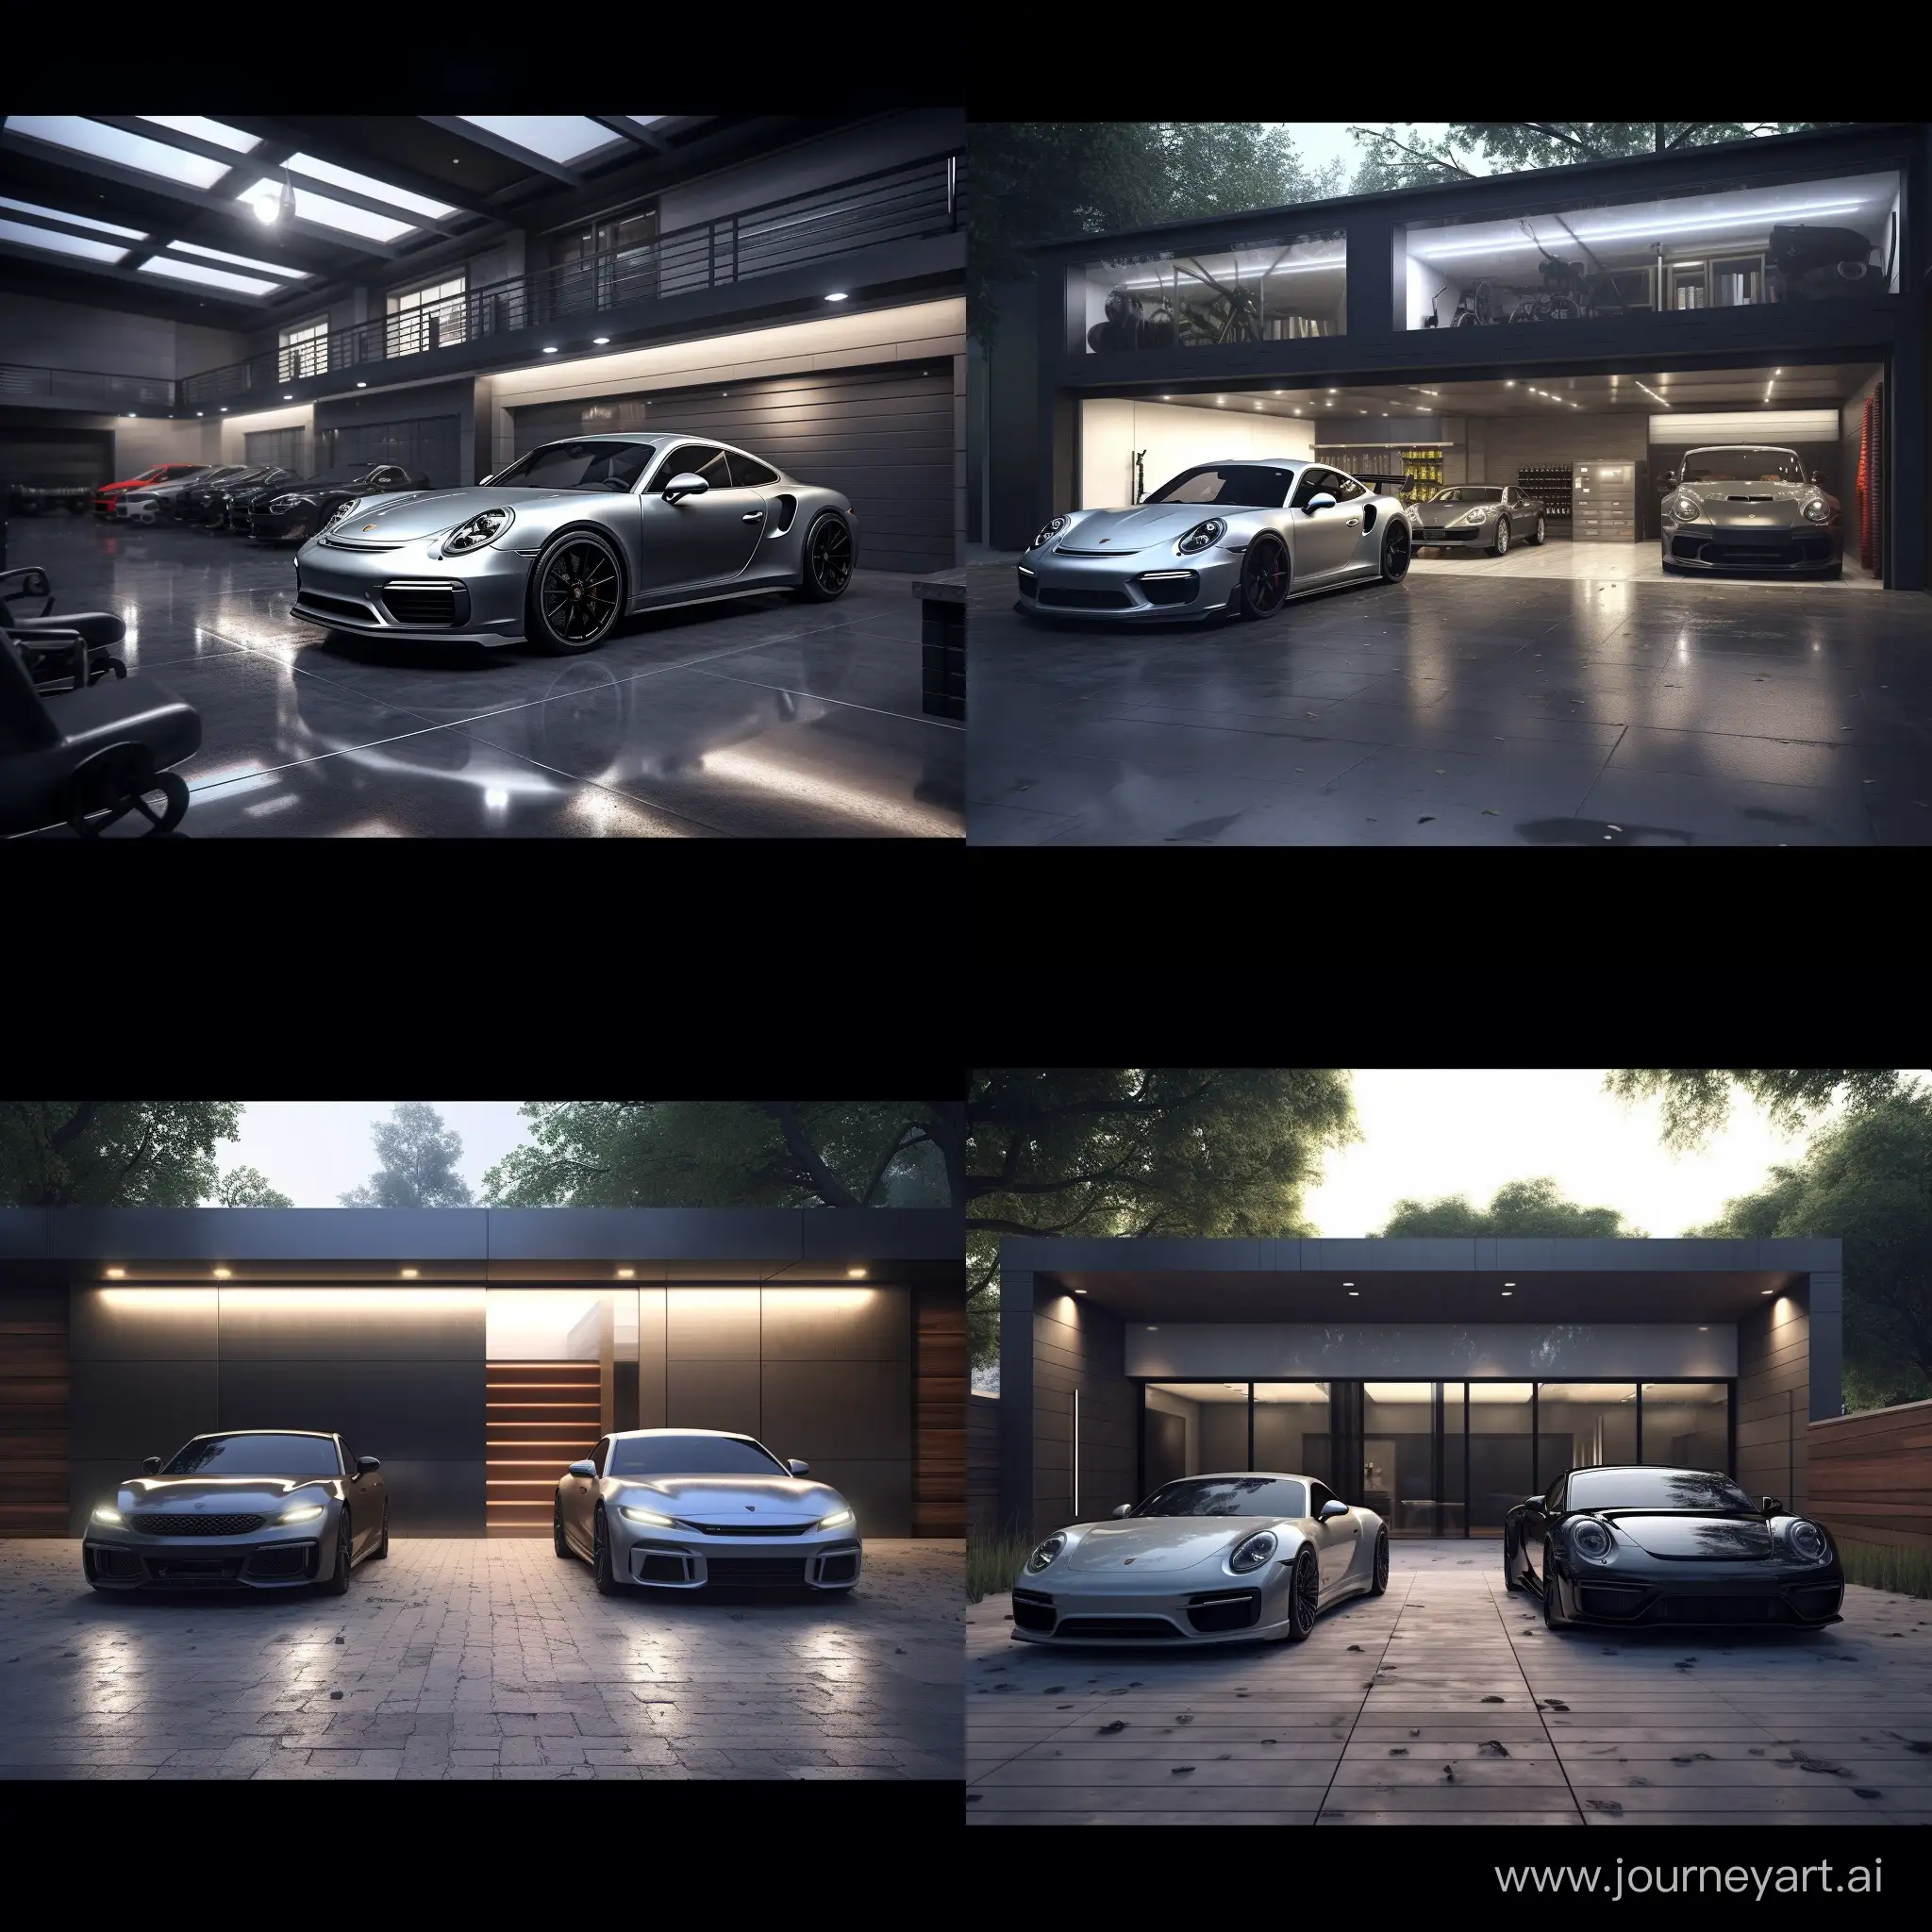 Modern-TwoCar-Garage-Design-in-Sophisticated-Gray-Tones-Ultra-HD-Realistic-Image-4K